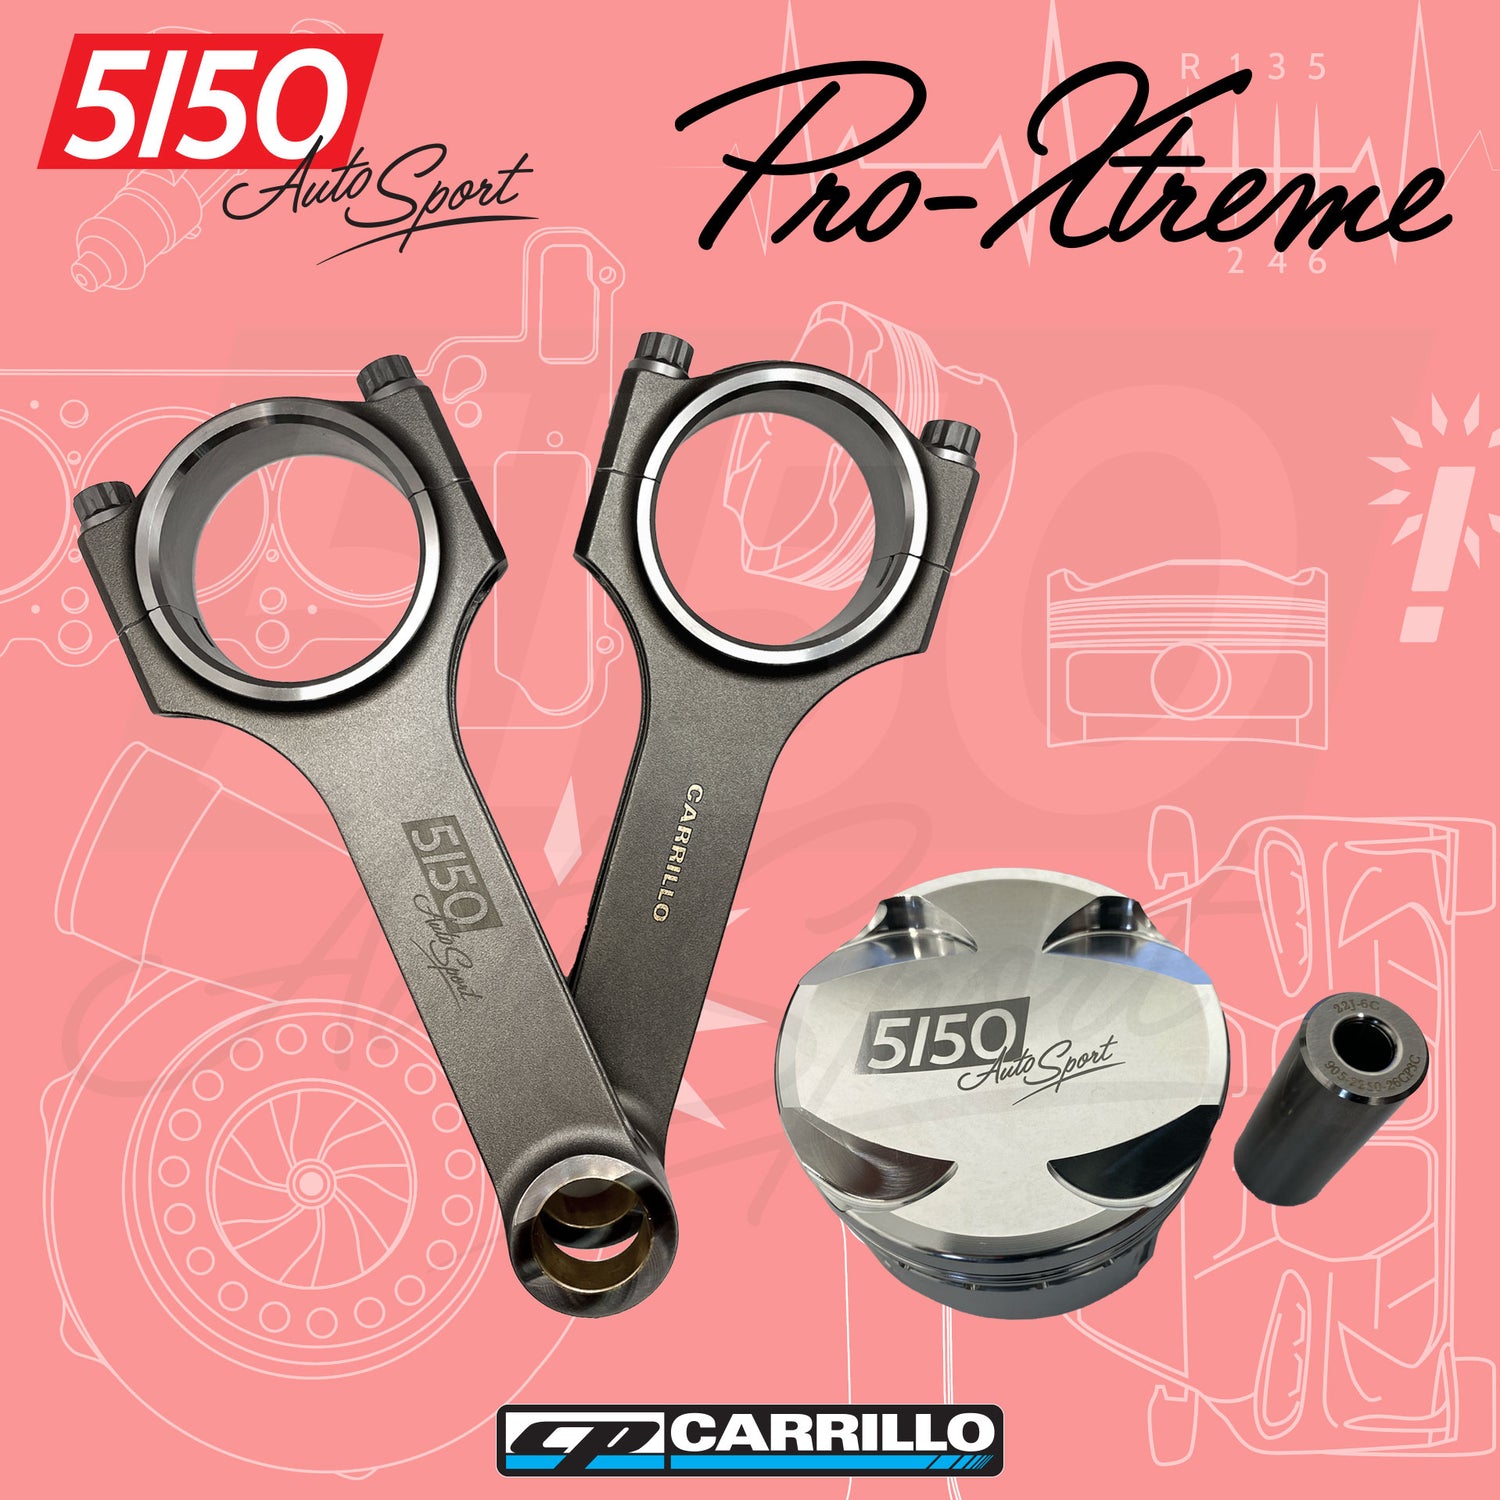 5150 AutoSport Pro-Xtreme Collection